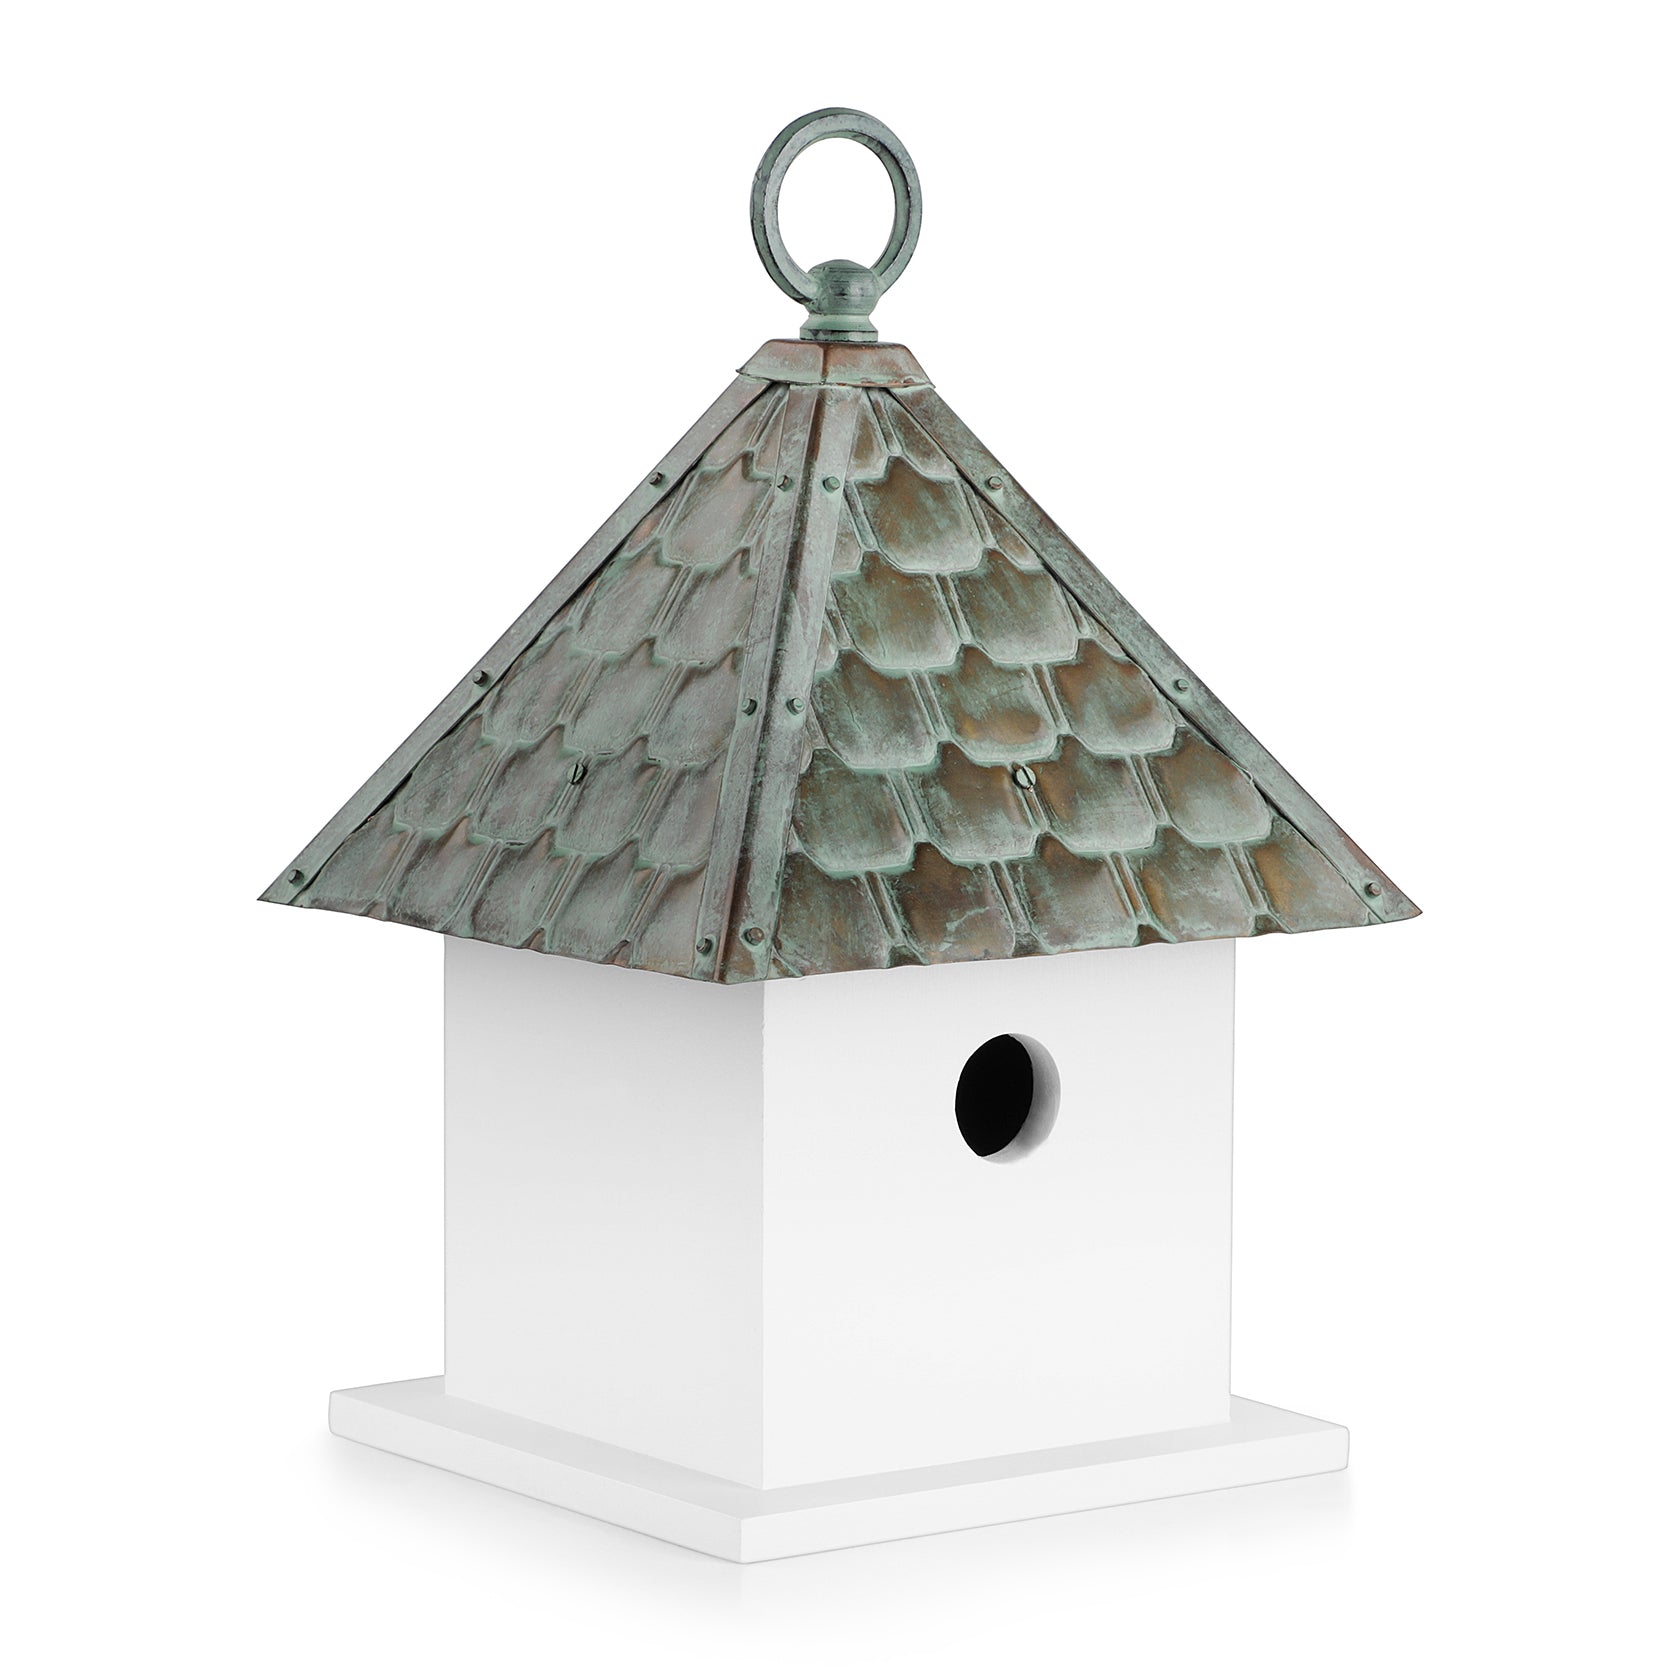 Bird House Bungalow – Shingled Verdigris Roof - Good Directions